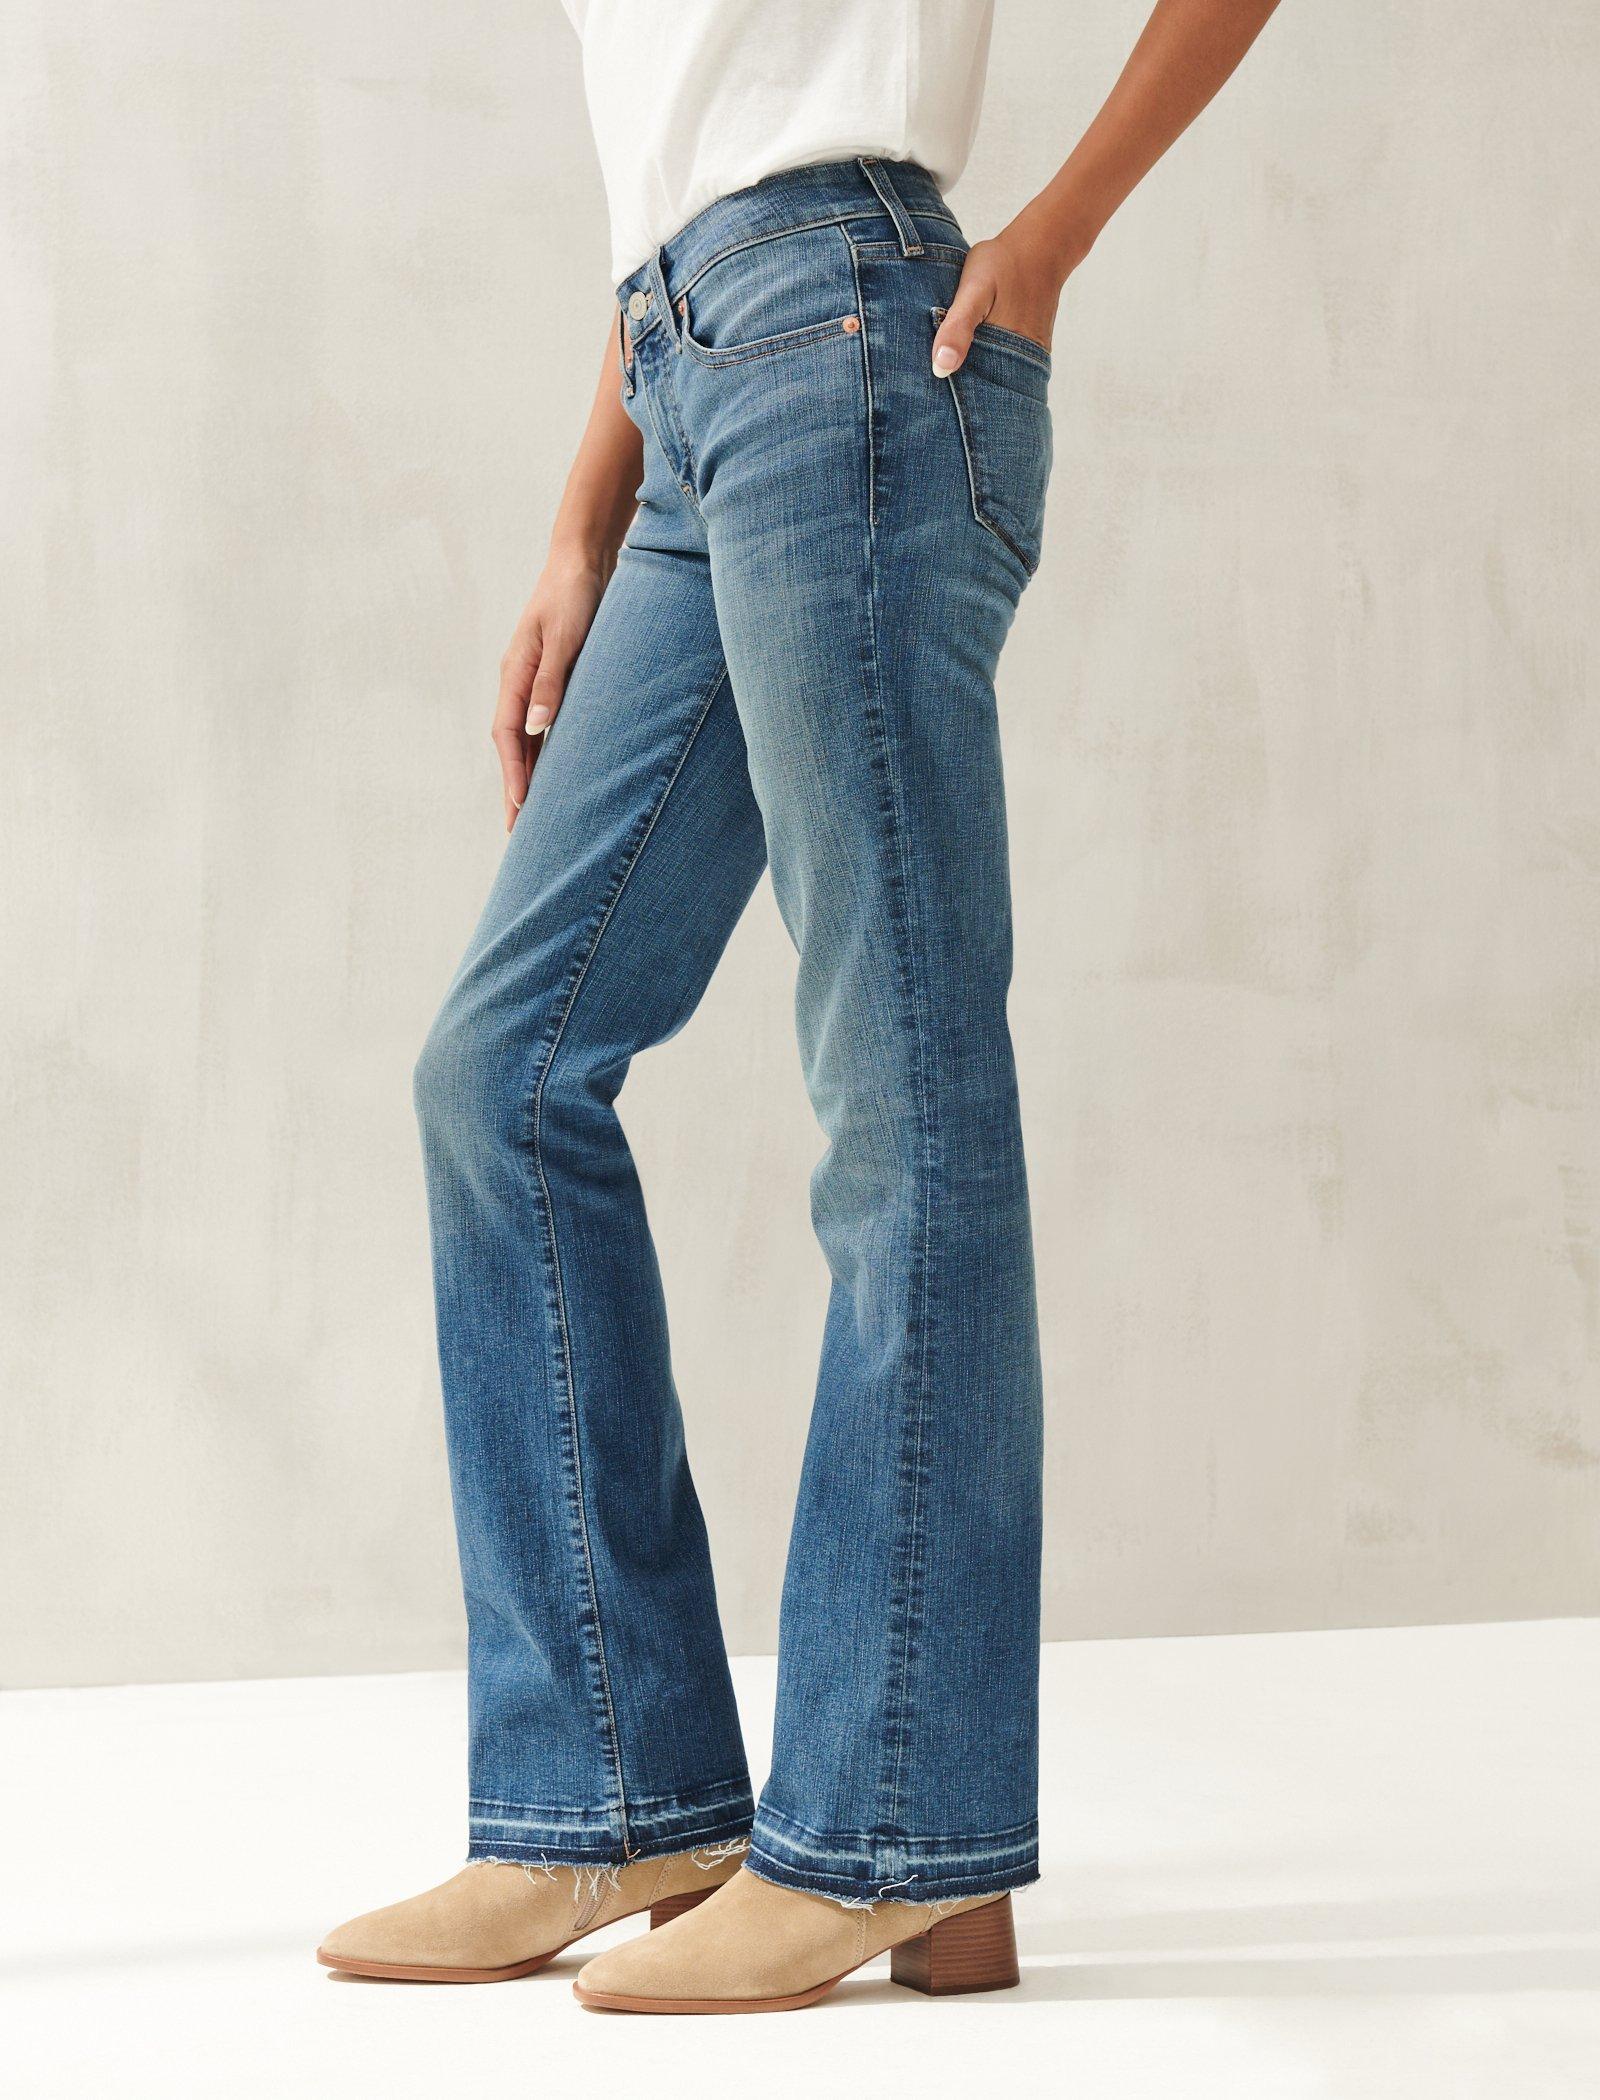 lucky brand jeans australia